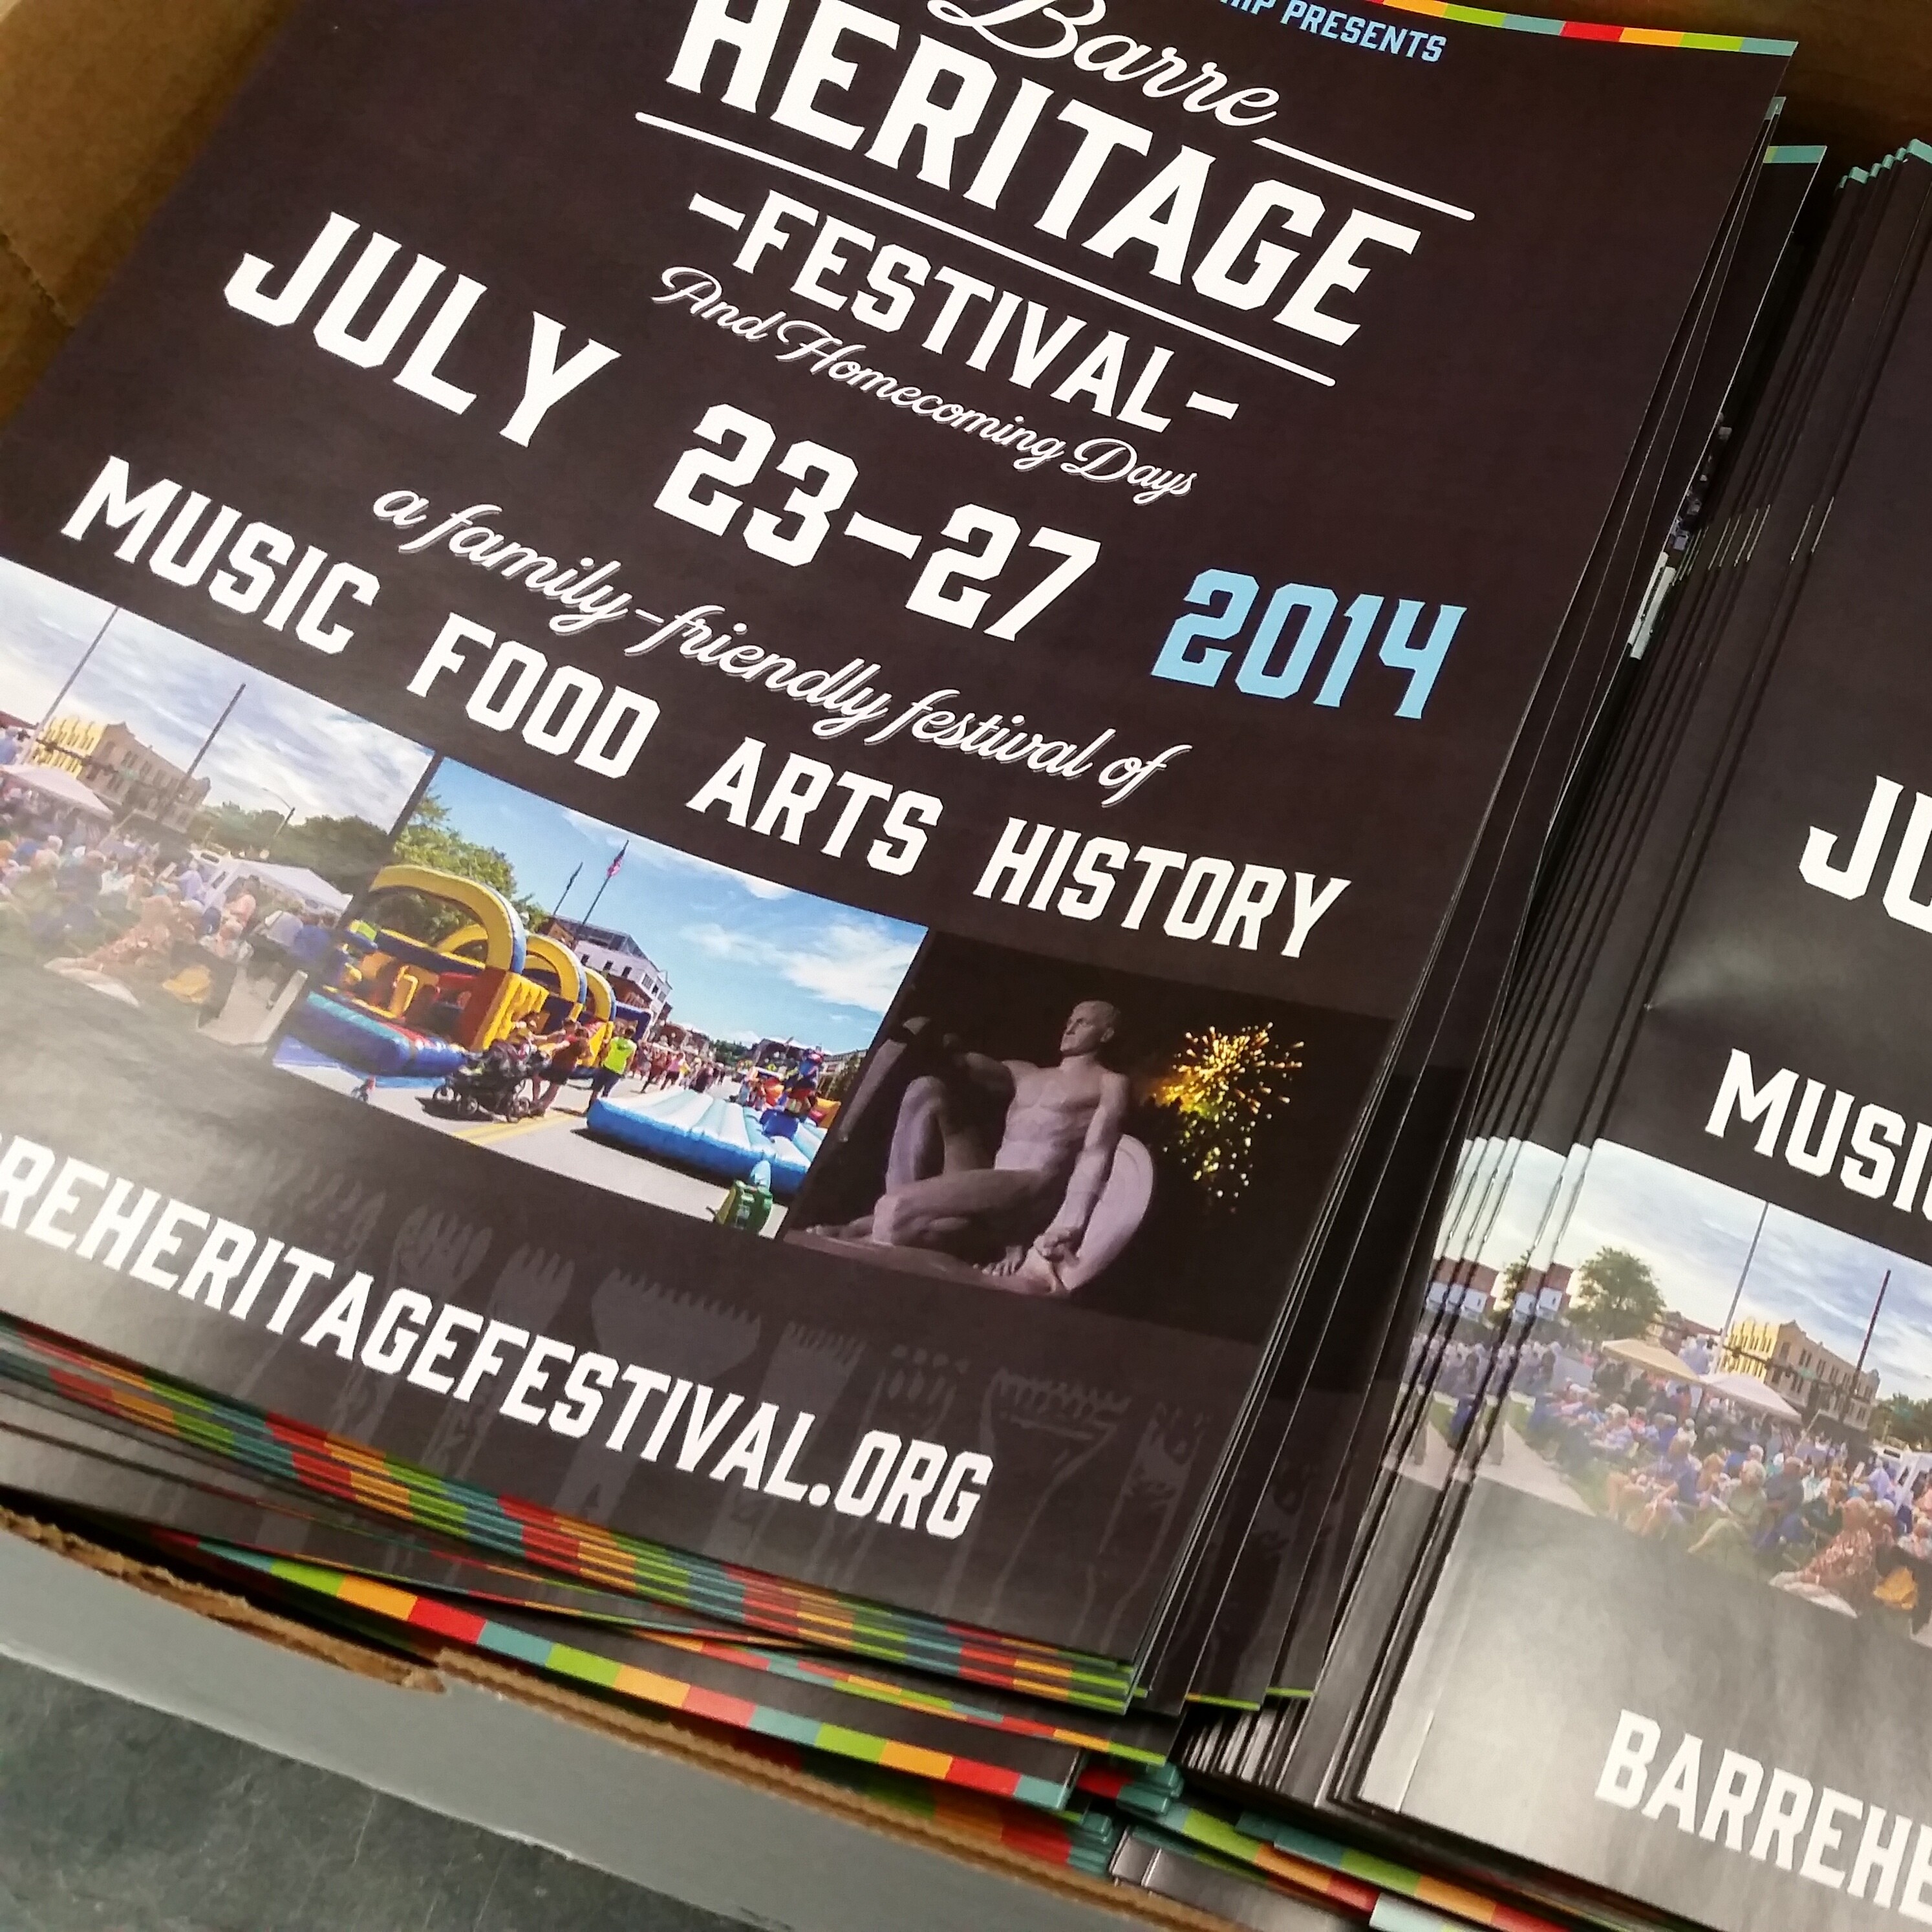 Event Programs for Barre Heritage Festival